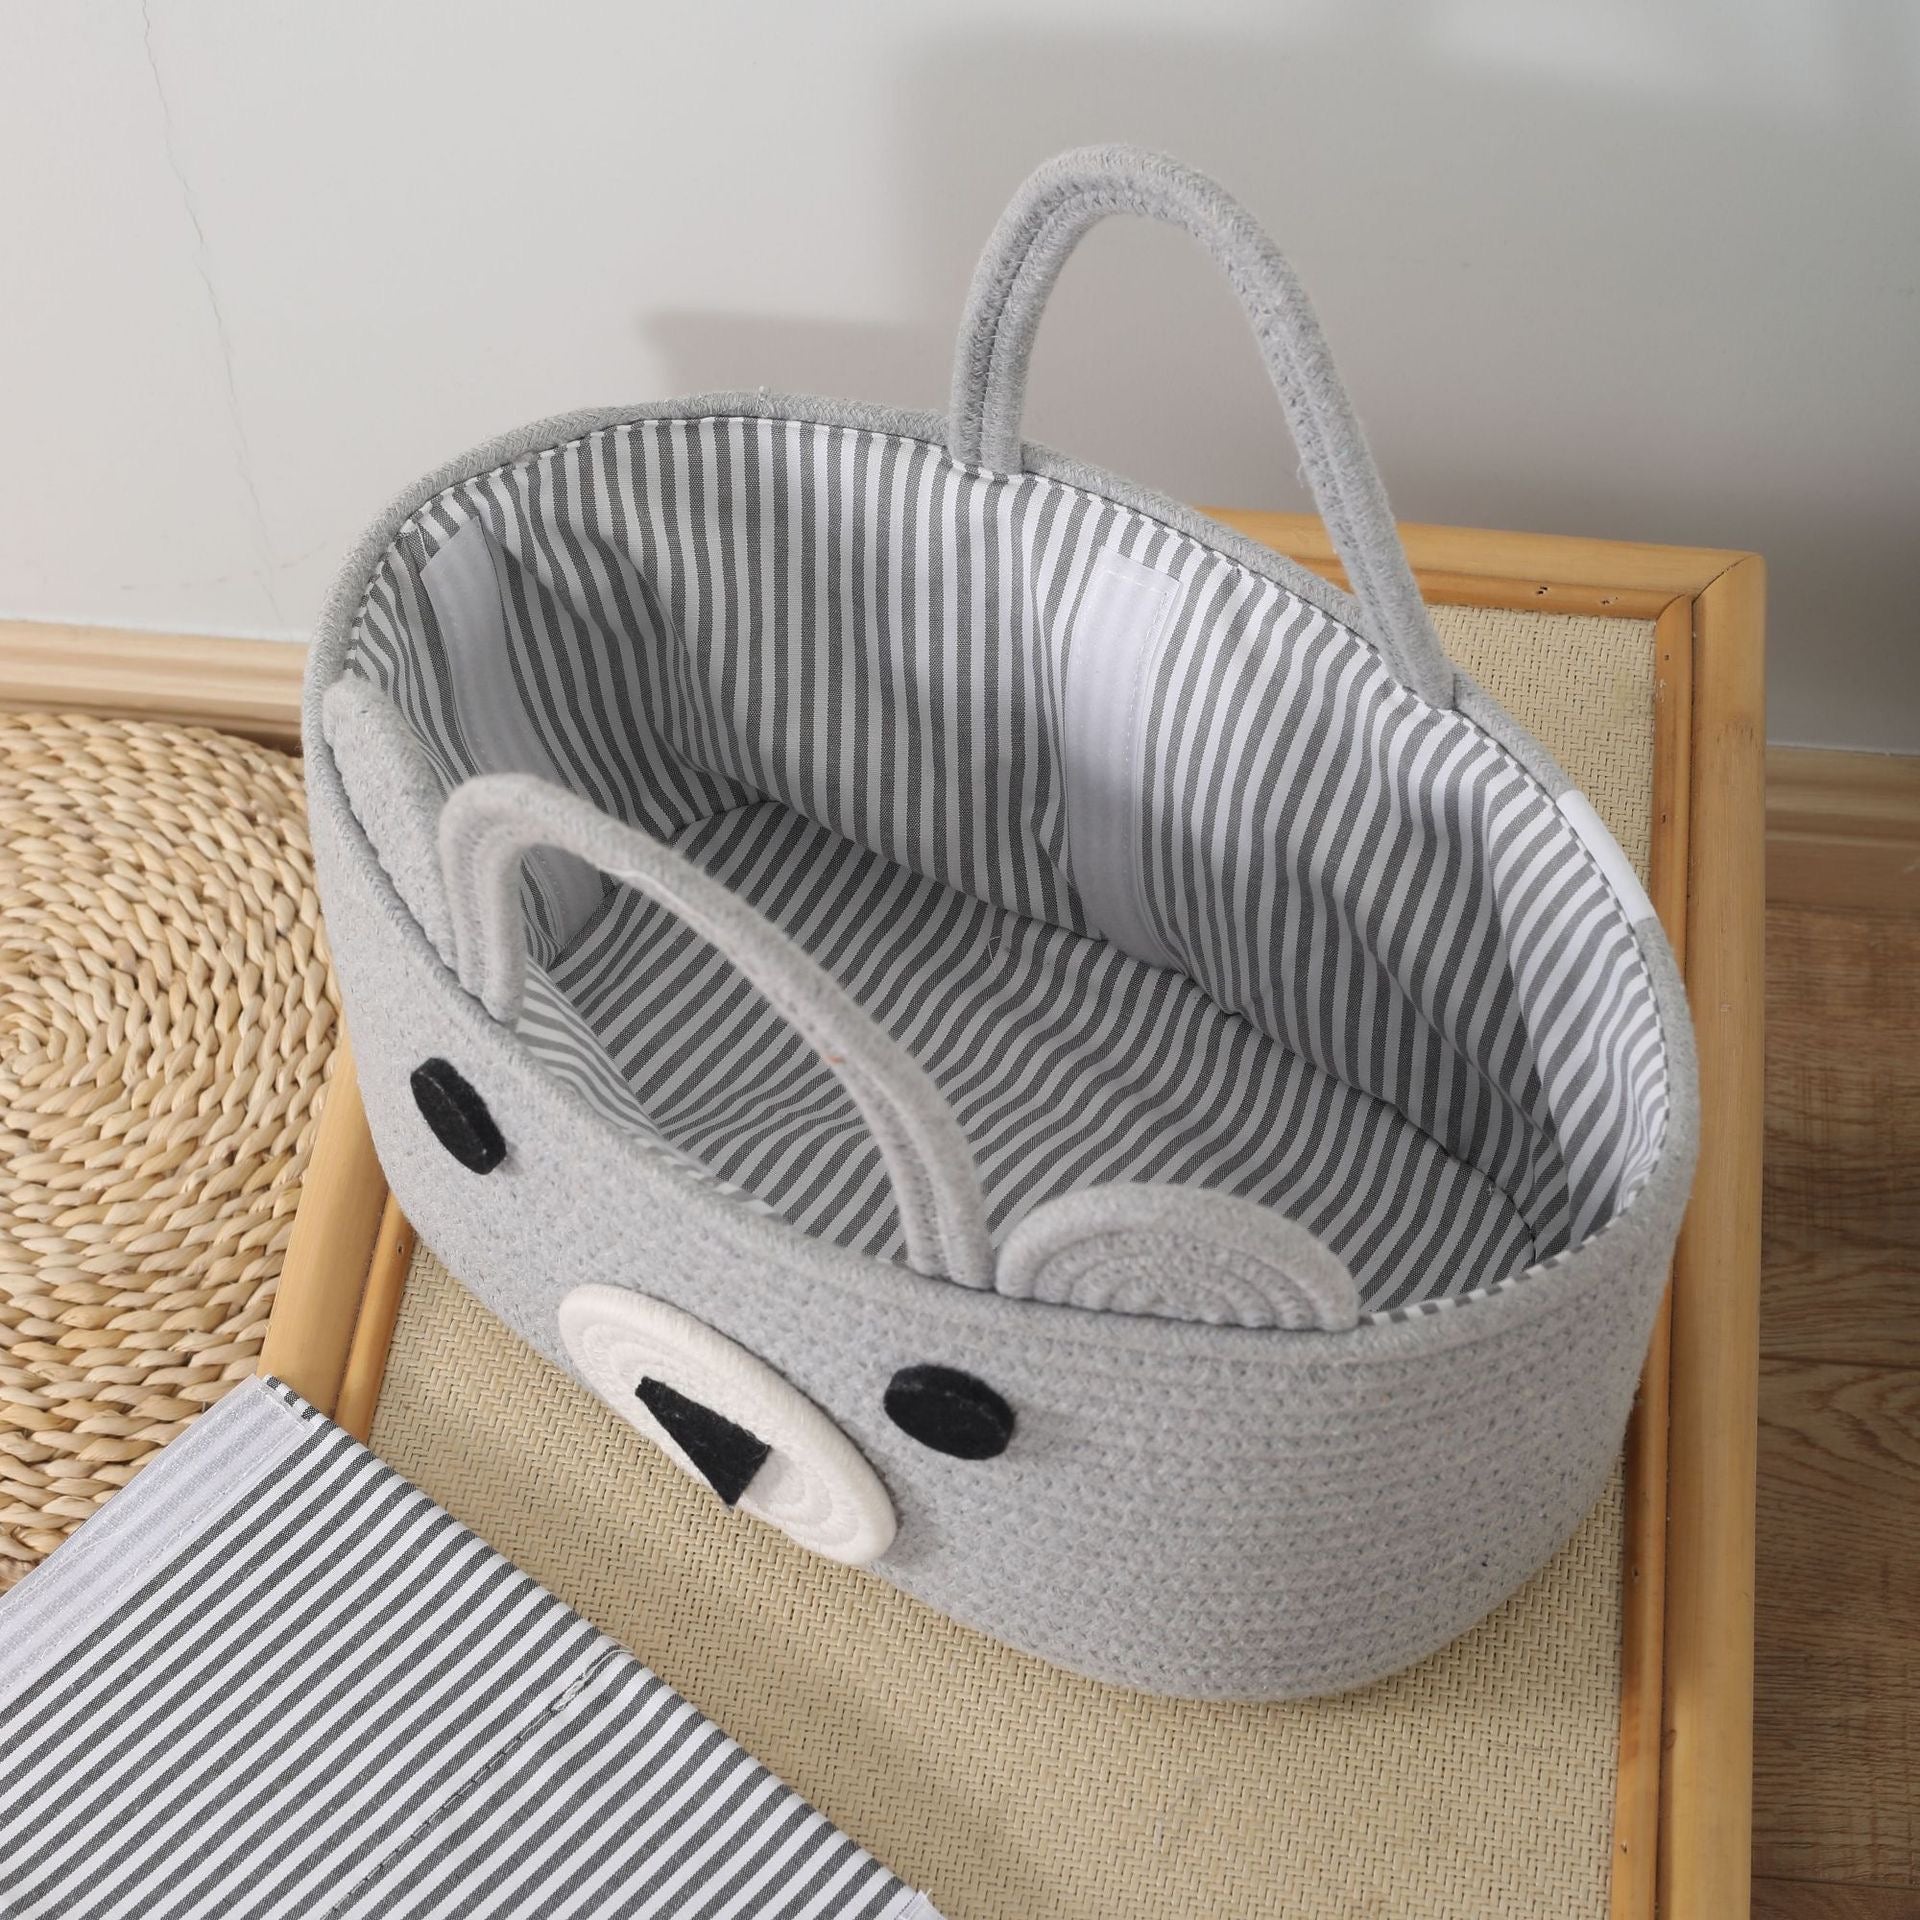 Premium Baby Diaper Caddy I Yoga Bag I Beach Bag I Multipurpose Organizer Bag - 100% Cotton Rope - Grey Teddy